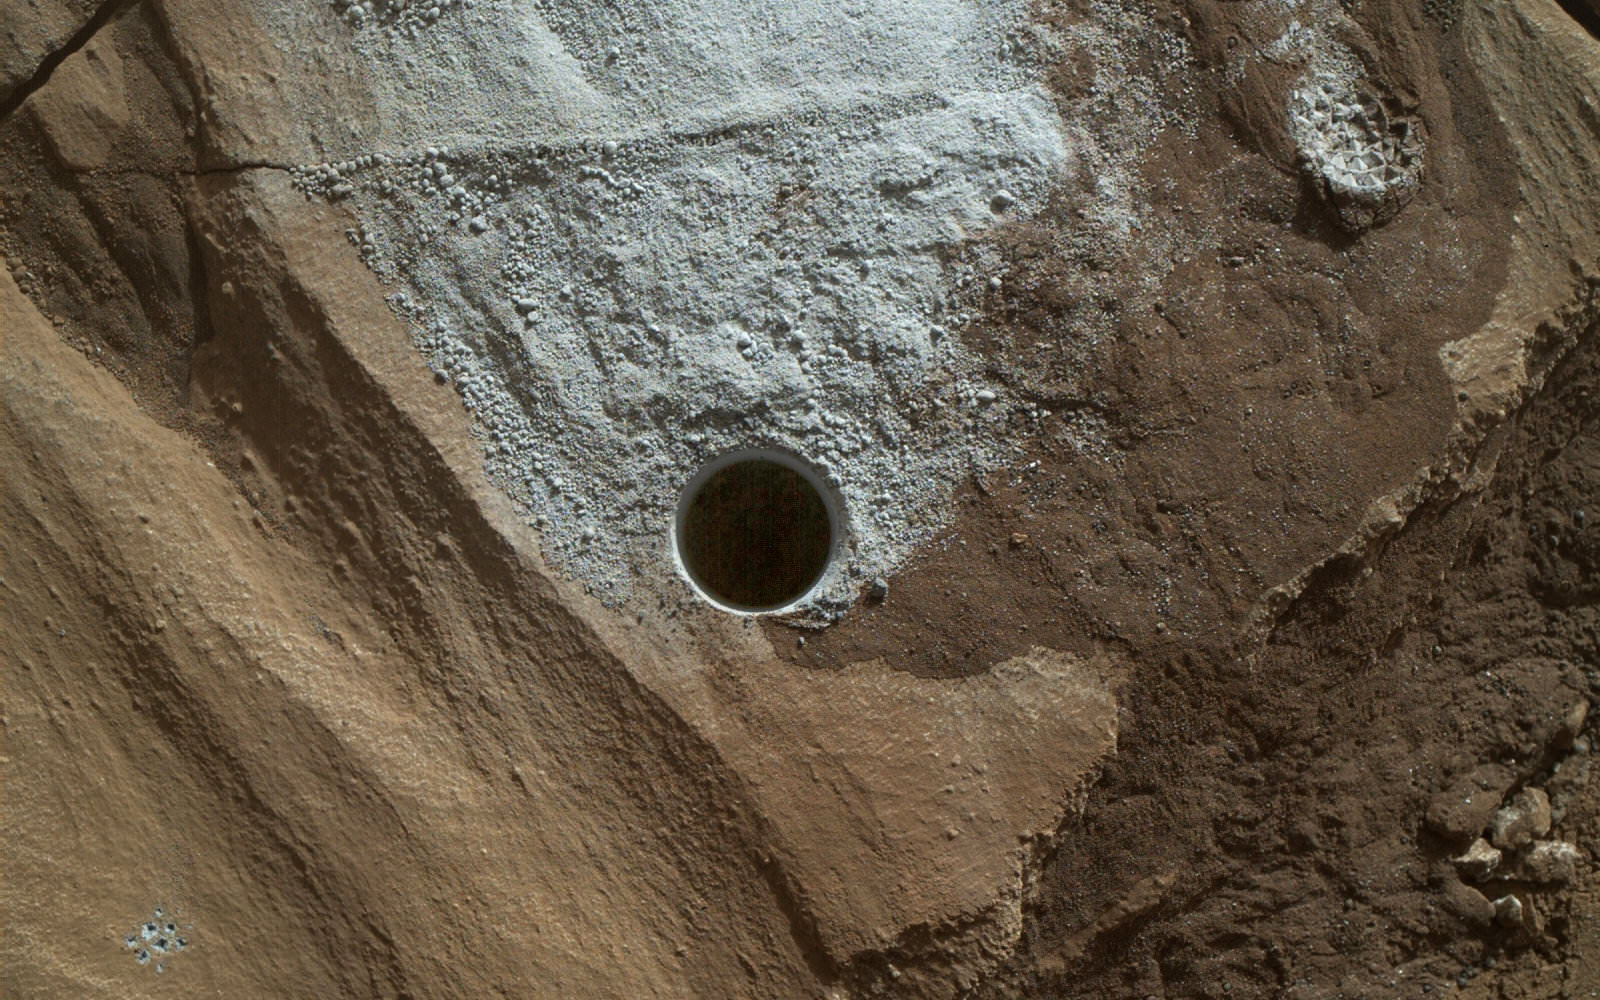 Curiosity rover views ‘Lubango’ drill target up close in this MAHLI camera image taken on Sol 1321, Apr. 24, 2016, processed to enhance details. Credit: NASA/JPL/Ken Kremer/kenkremer.com/Marco Di Lorenzo